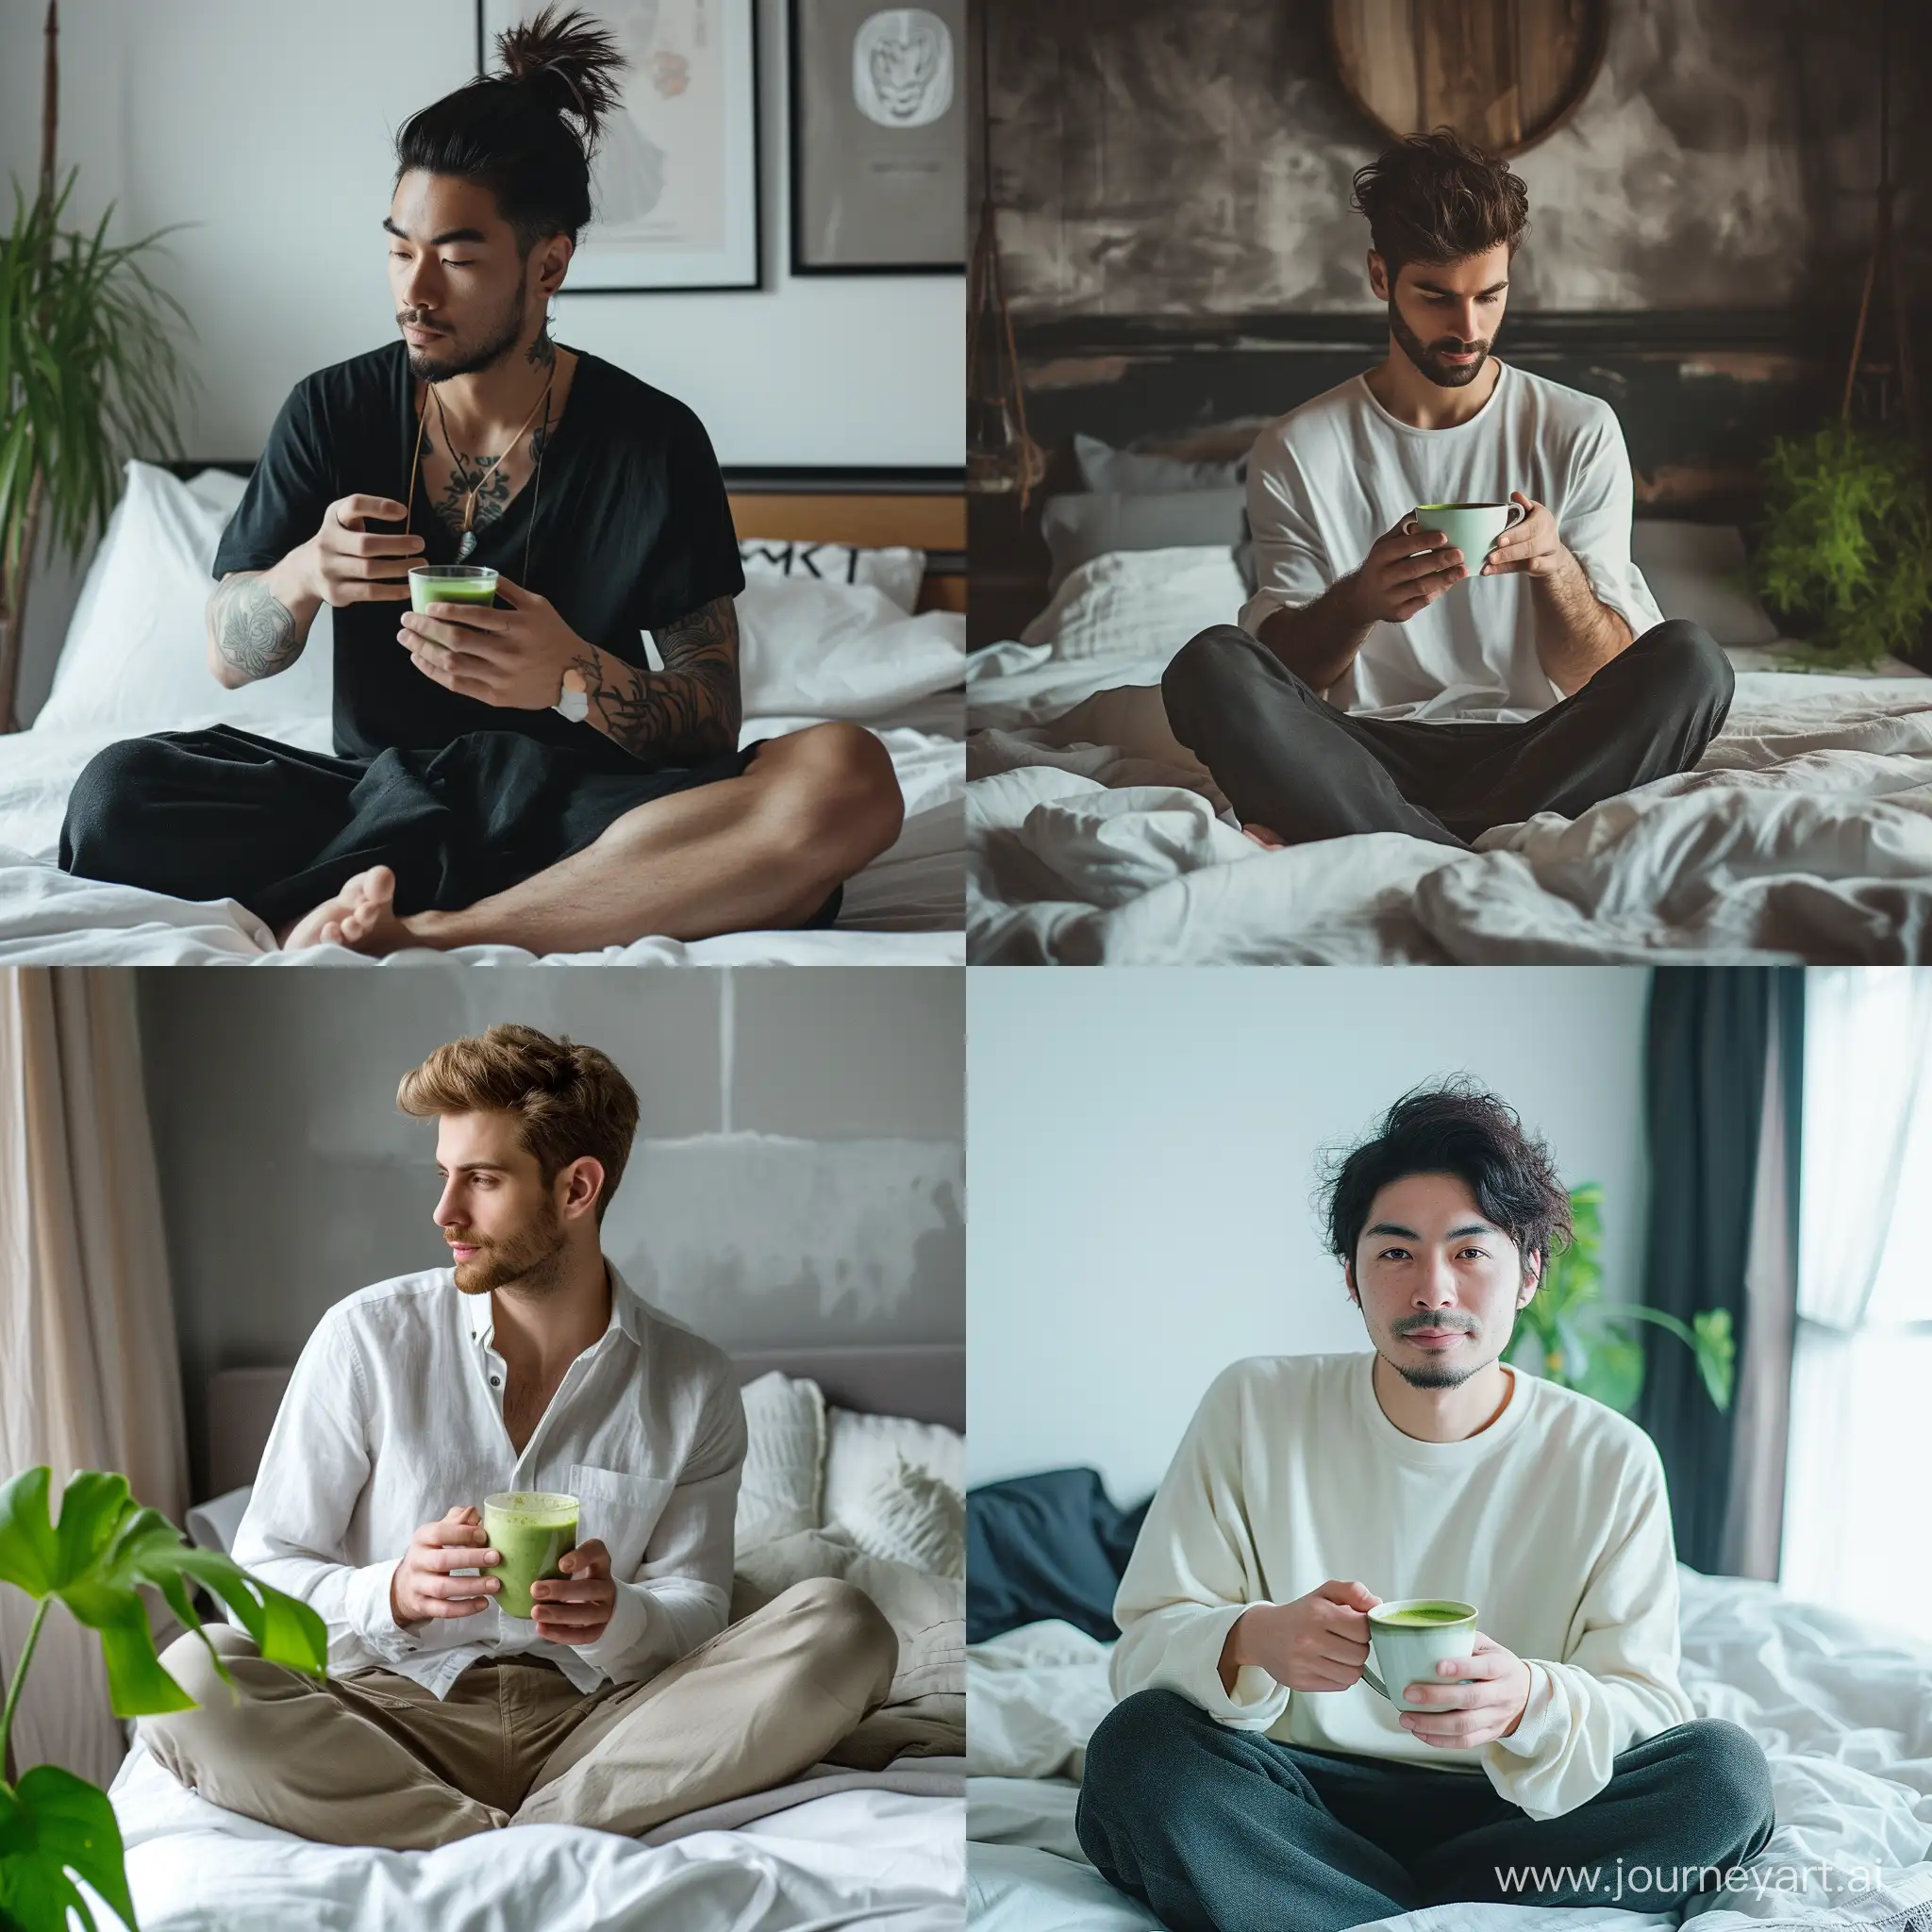 Relaxed-Man-Enjoying-Matcha-Tea-in-Cozy-Bedroom-Setting